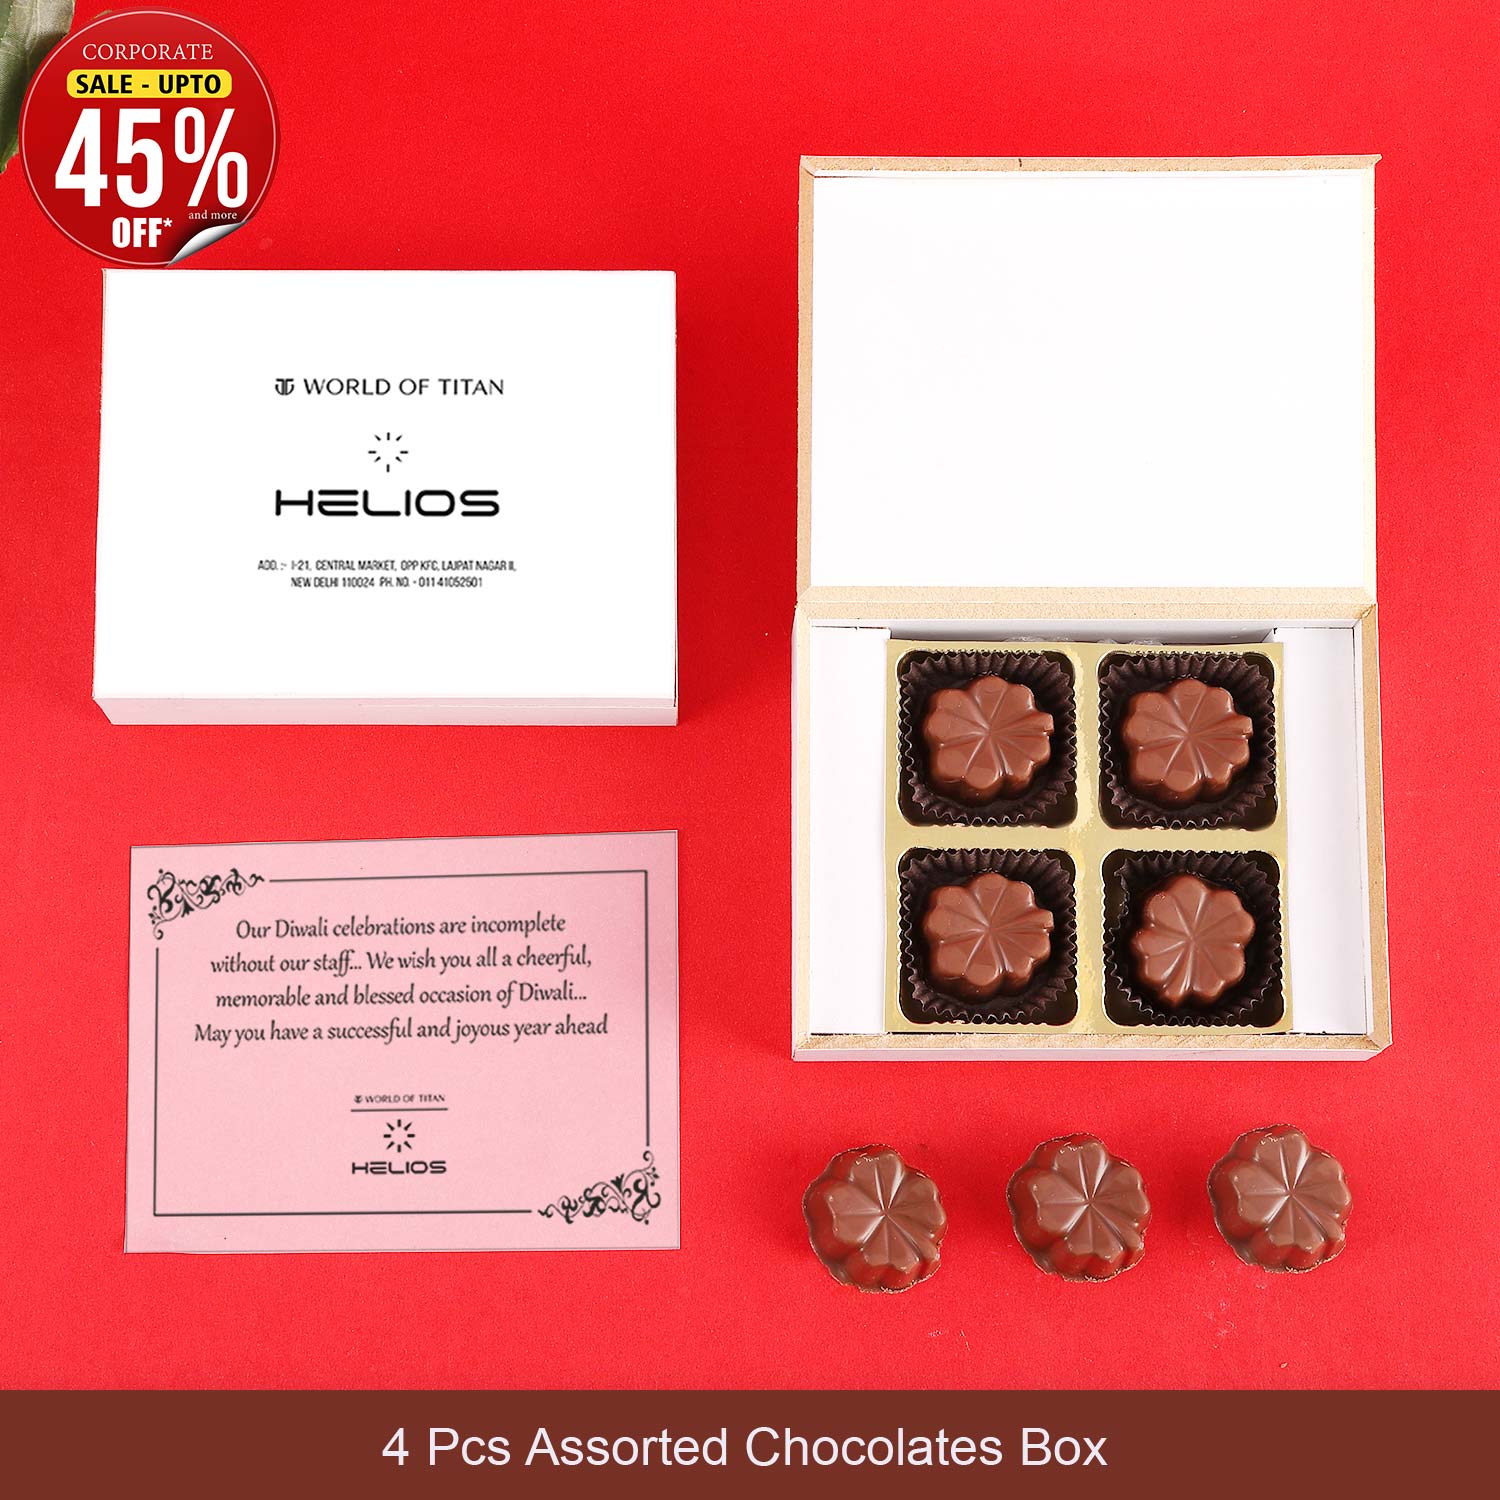 Promotional Gift at ChocoManualART, custom chocolate bars with company logo, personalised selection box